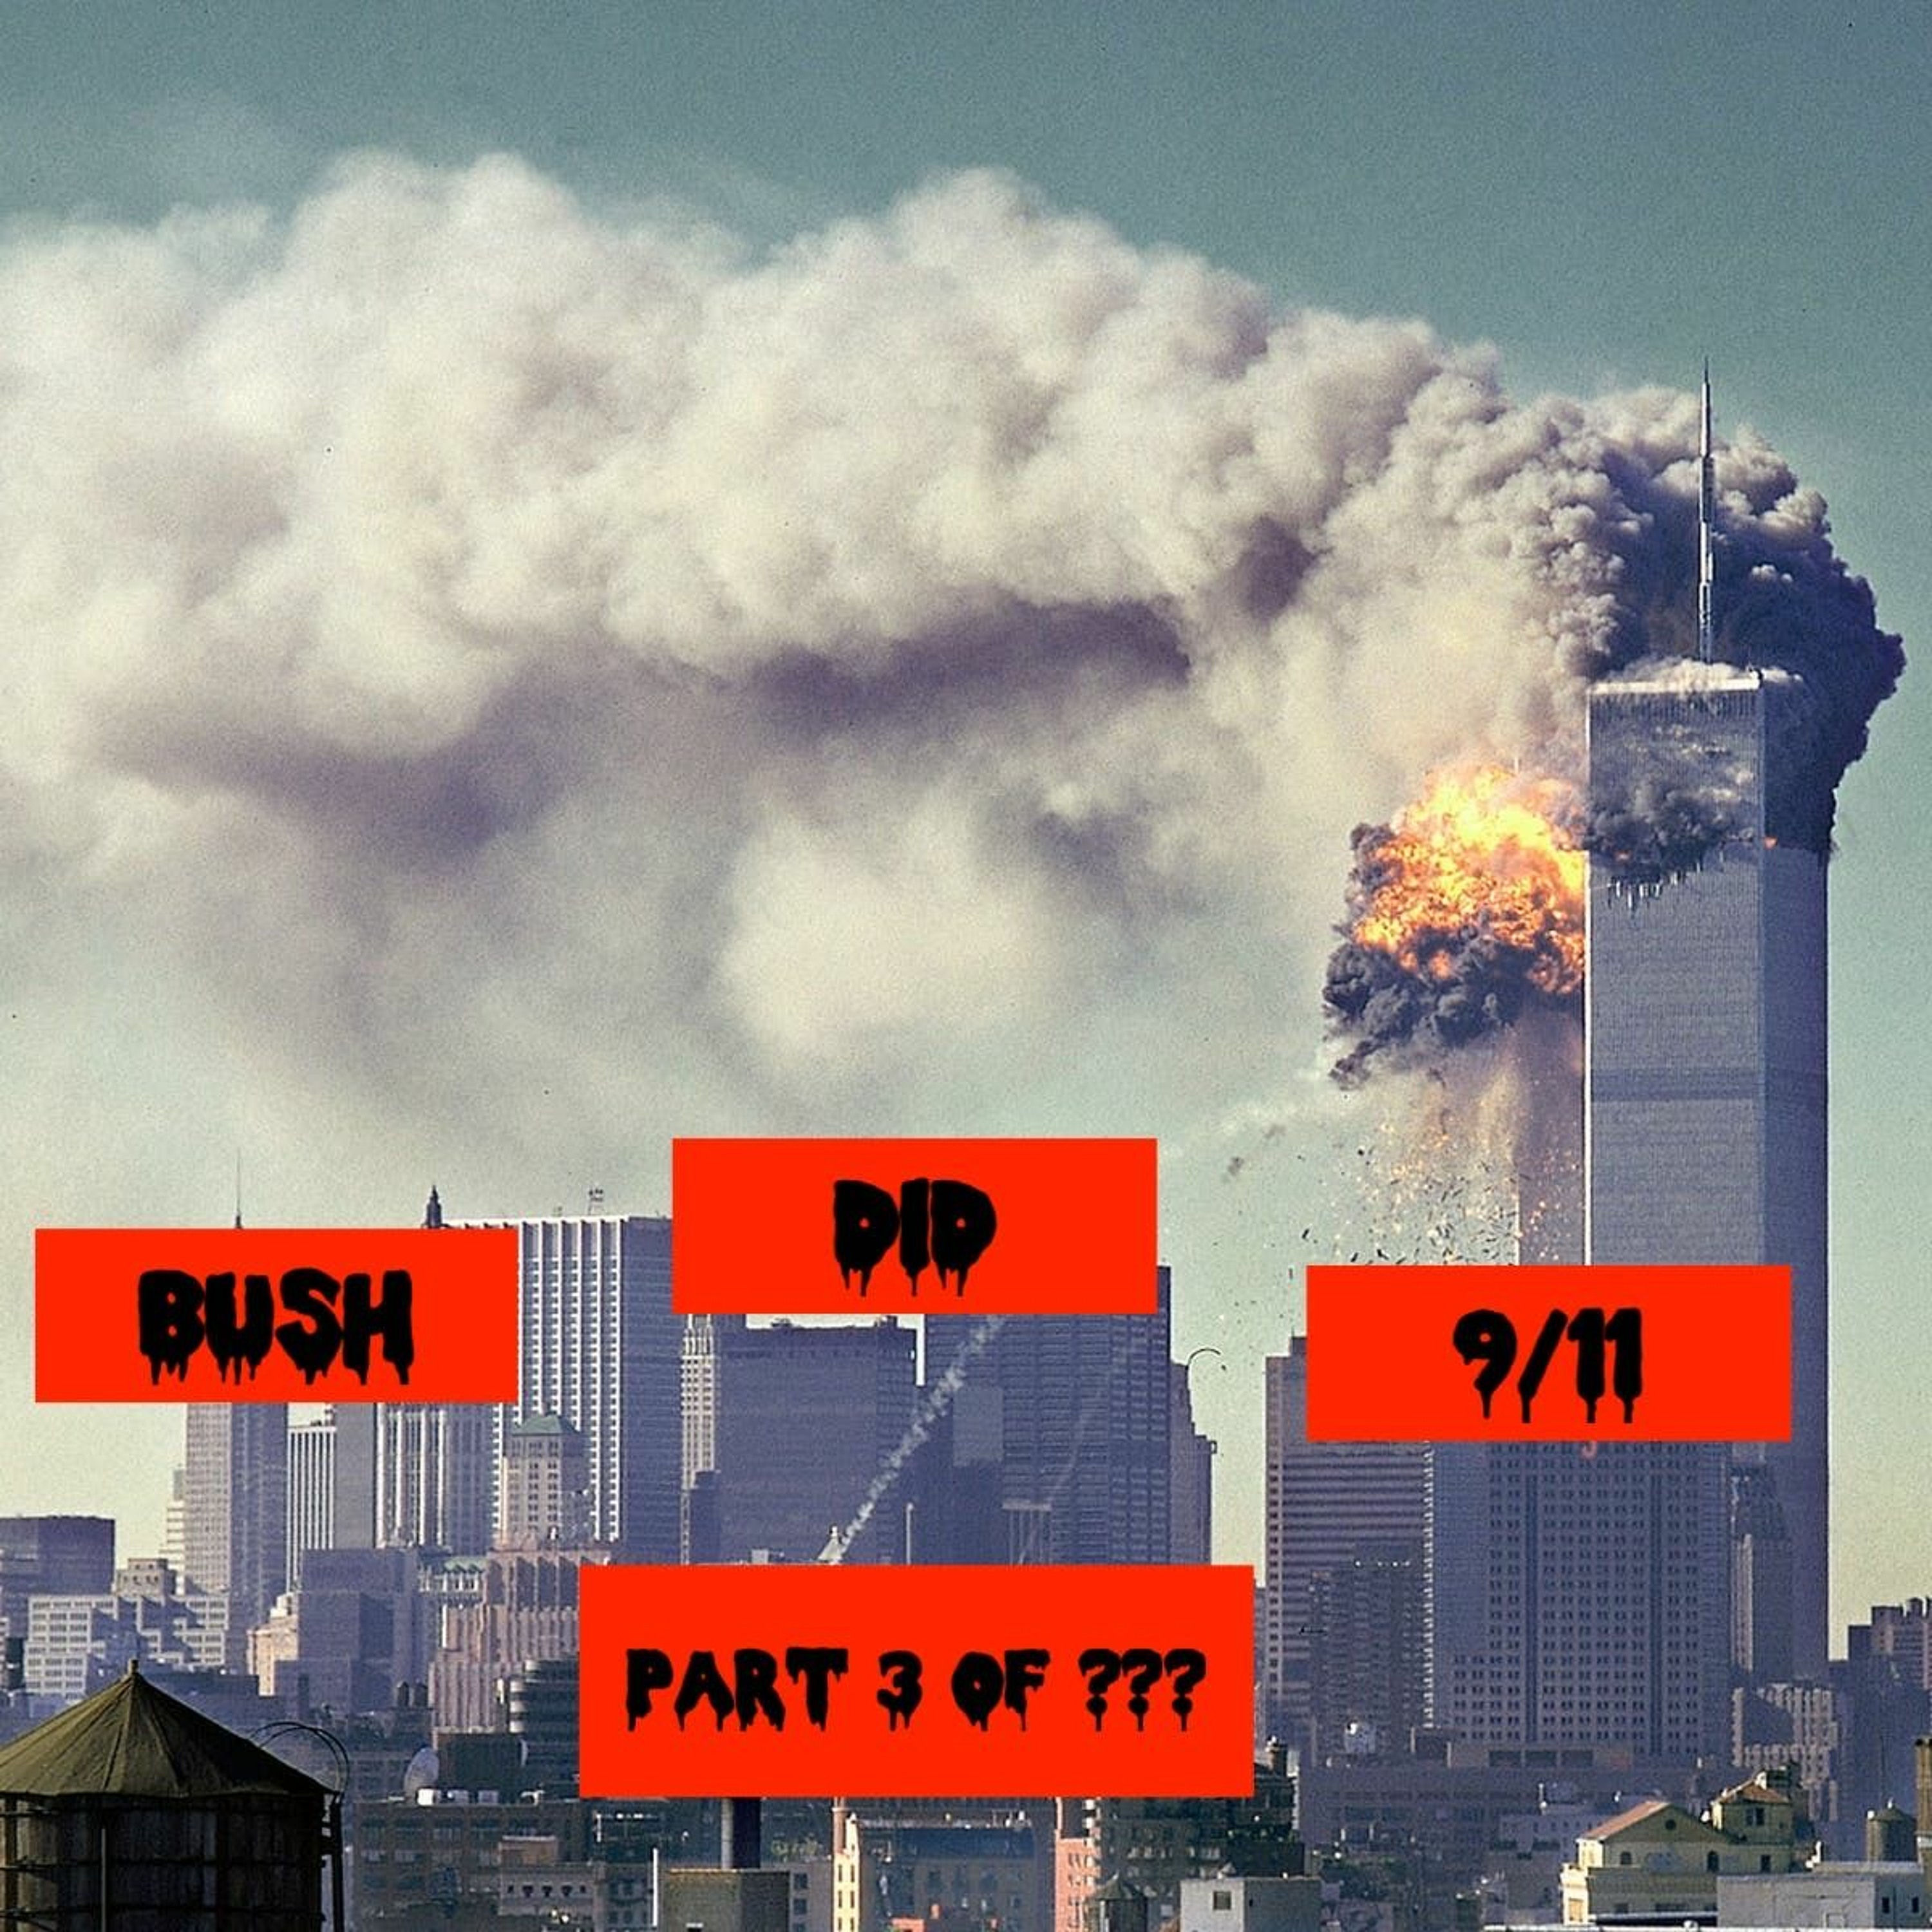 [9/11 week] Bush Did 9/11 Part 3